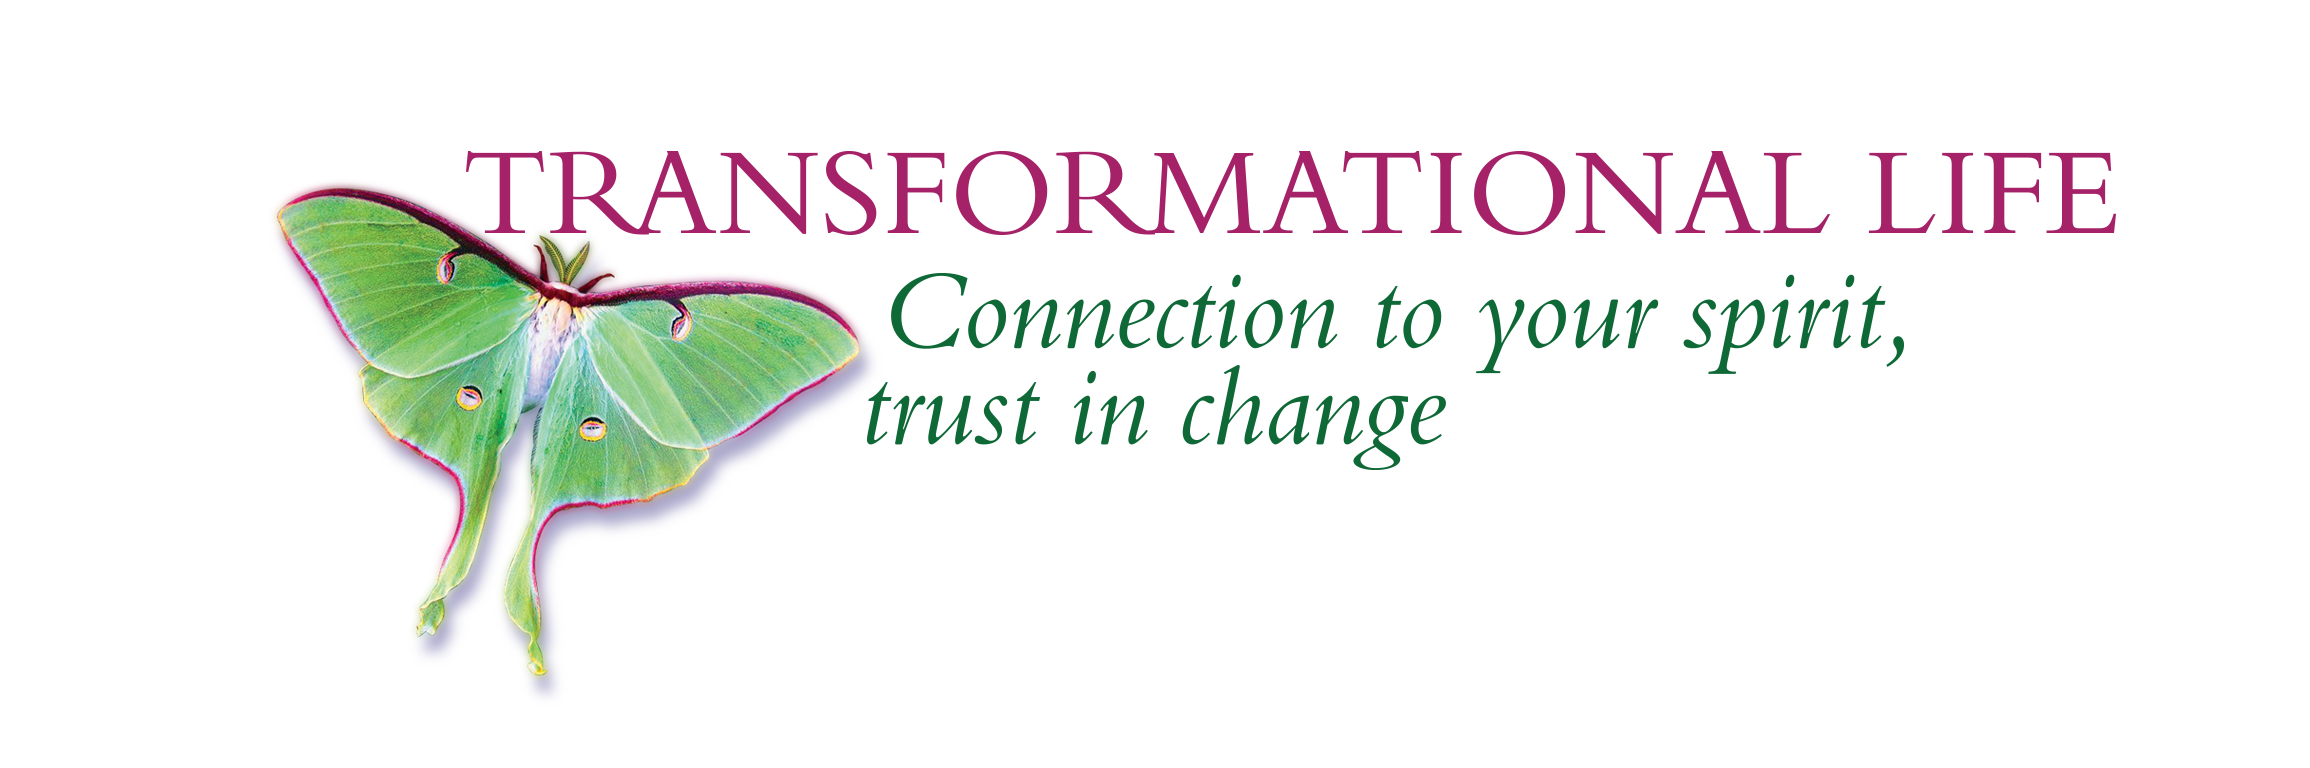 Transformational Life